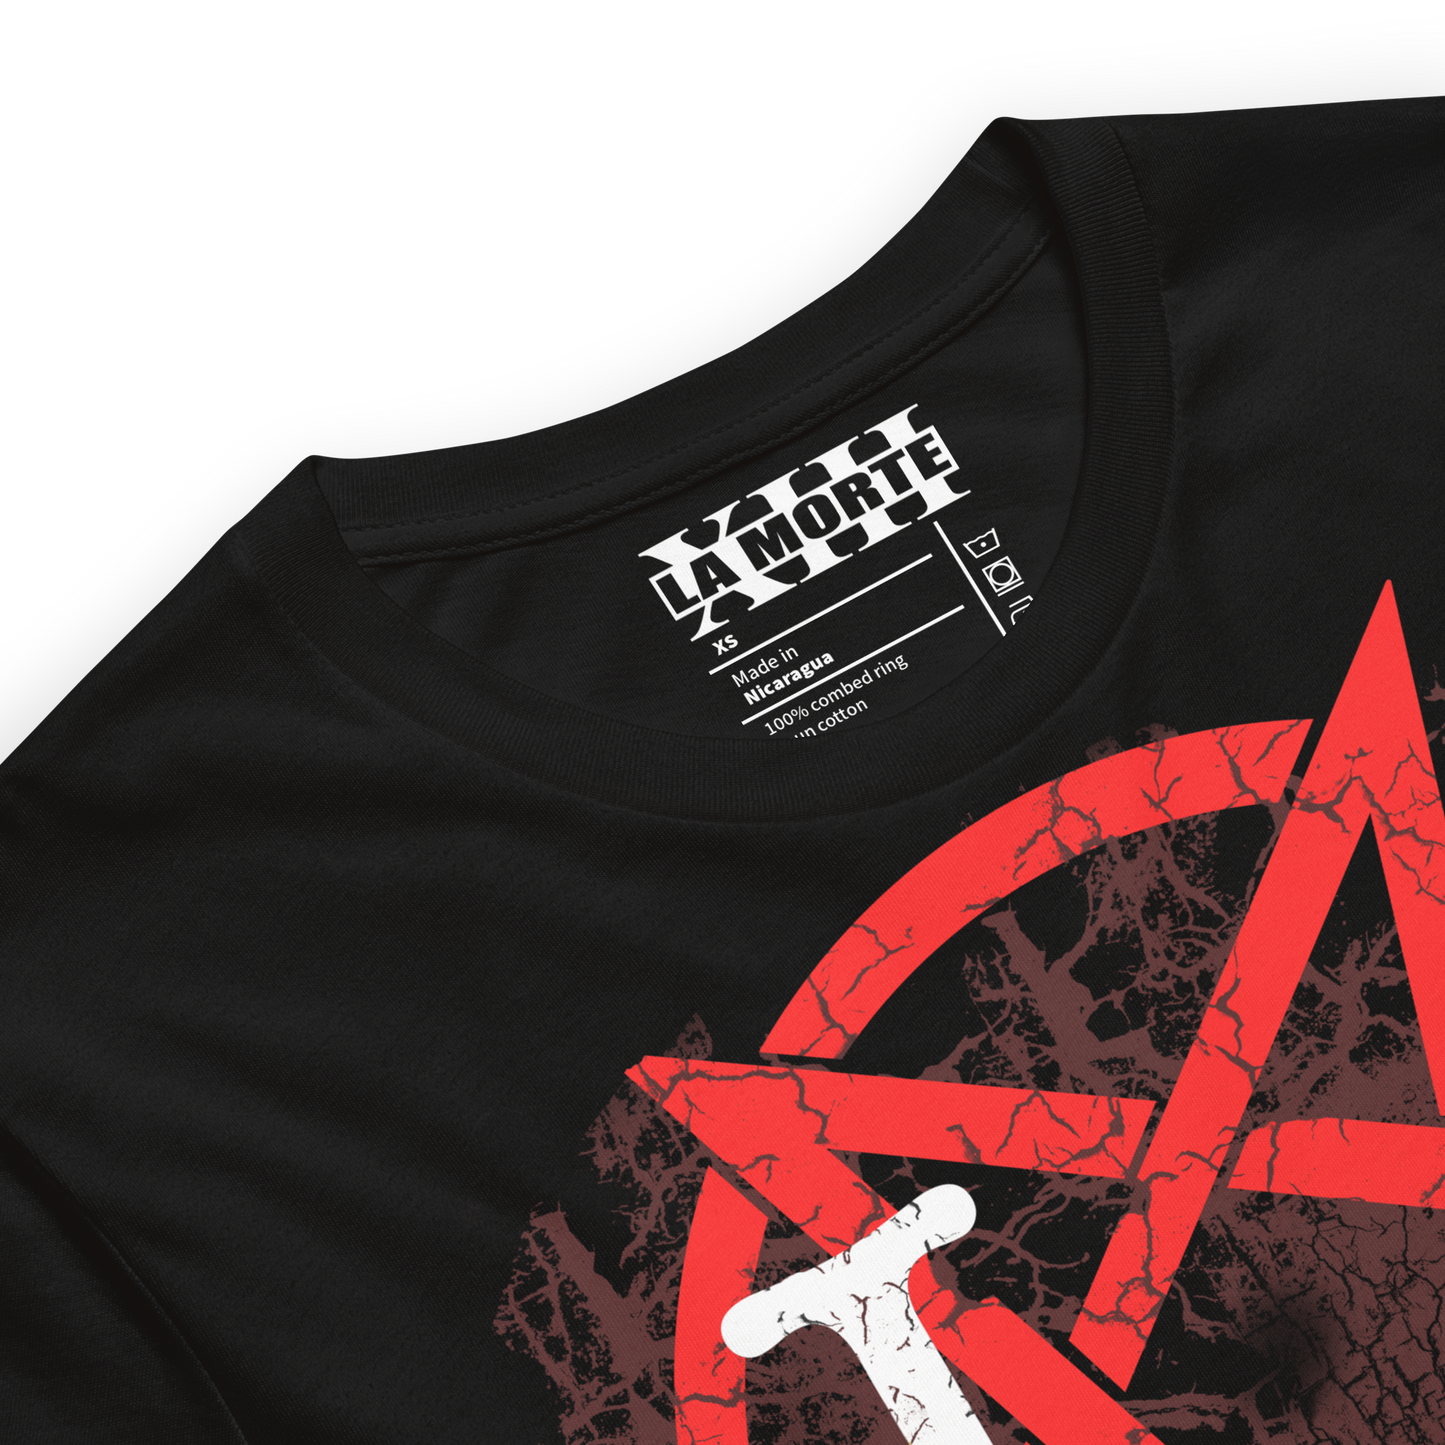 I Satan You • Unisex T-Shirt